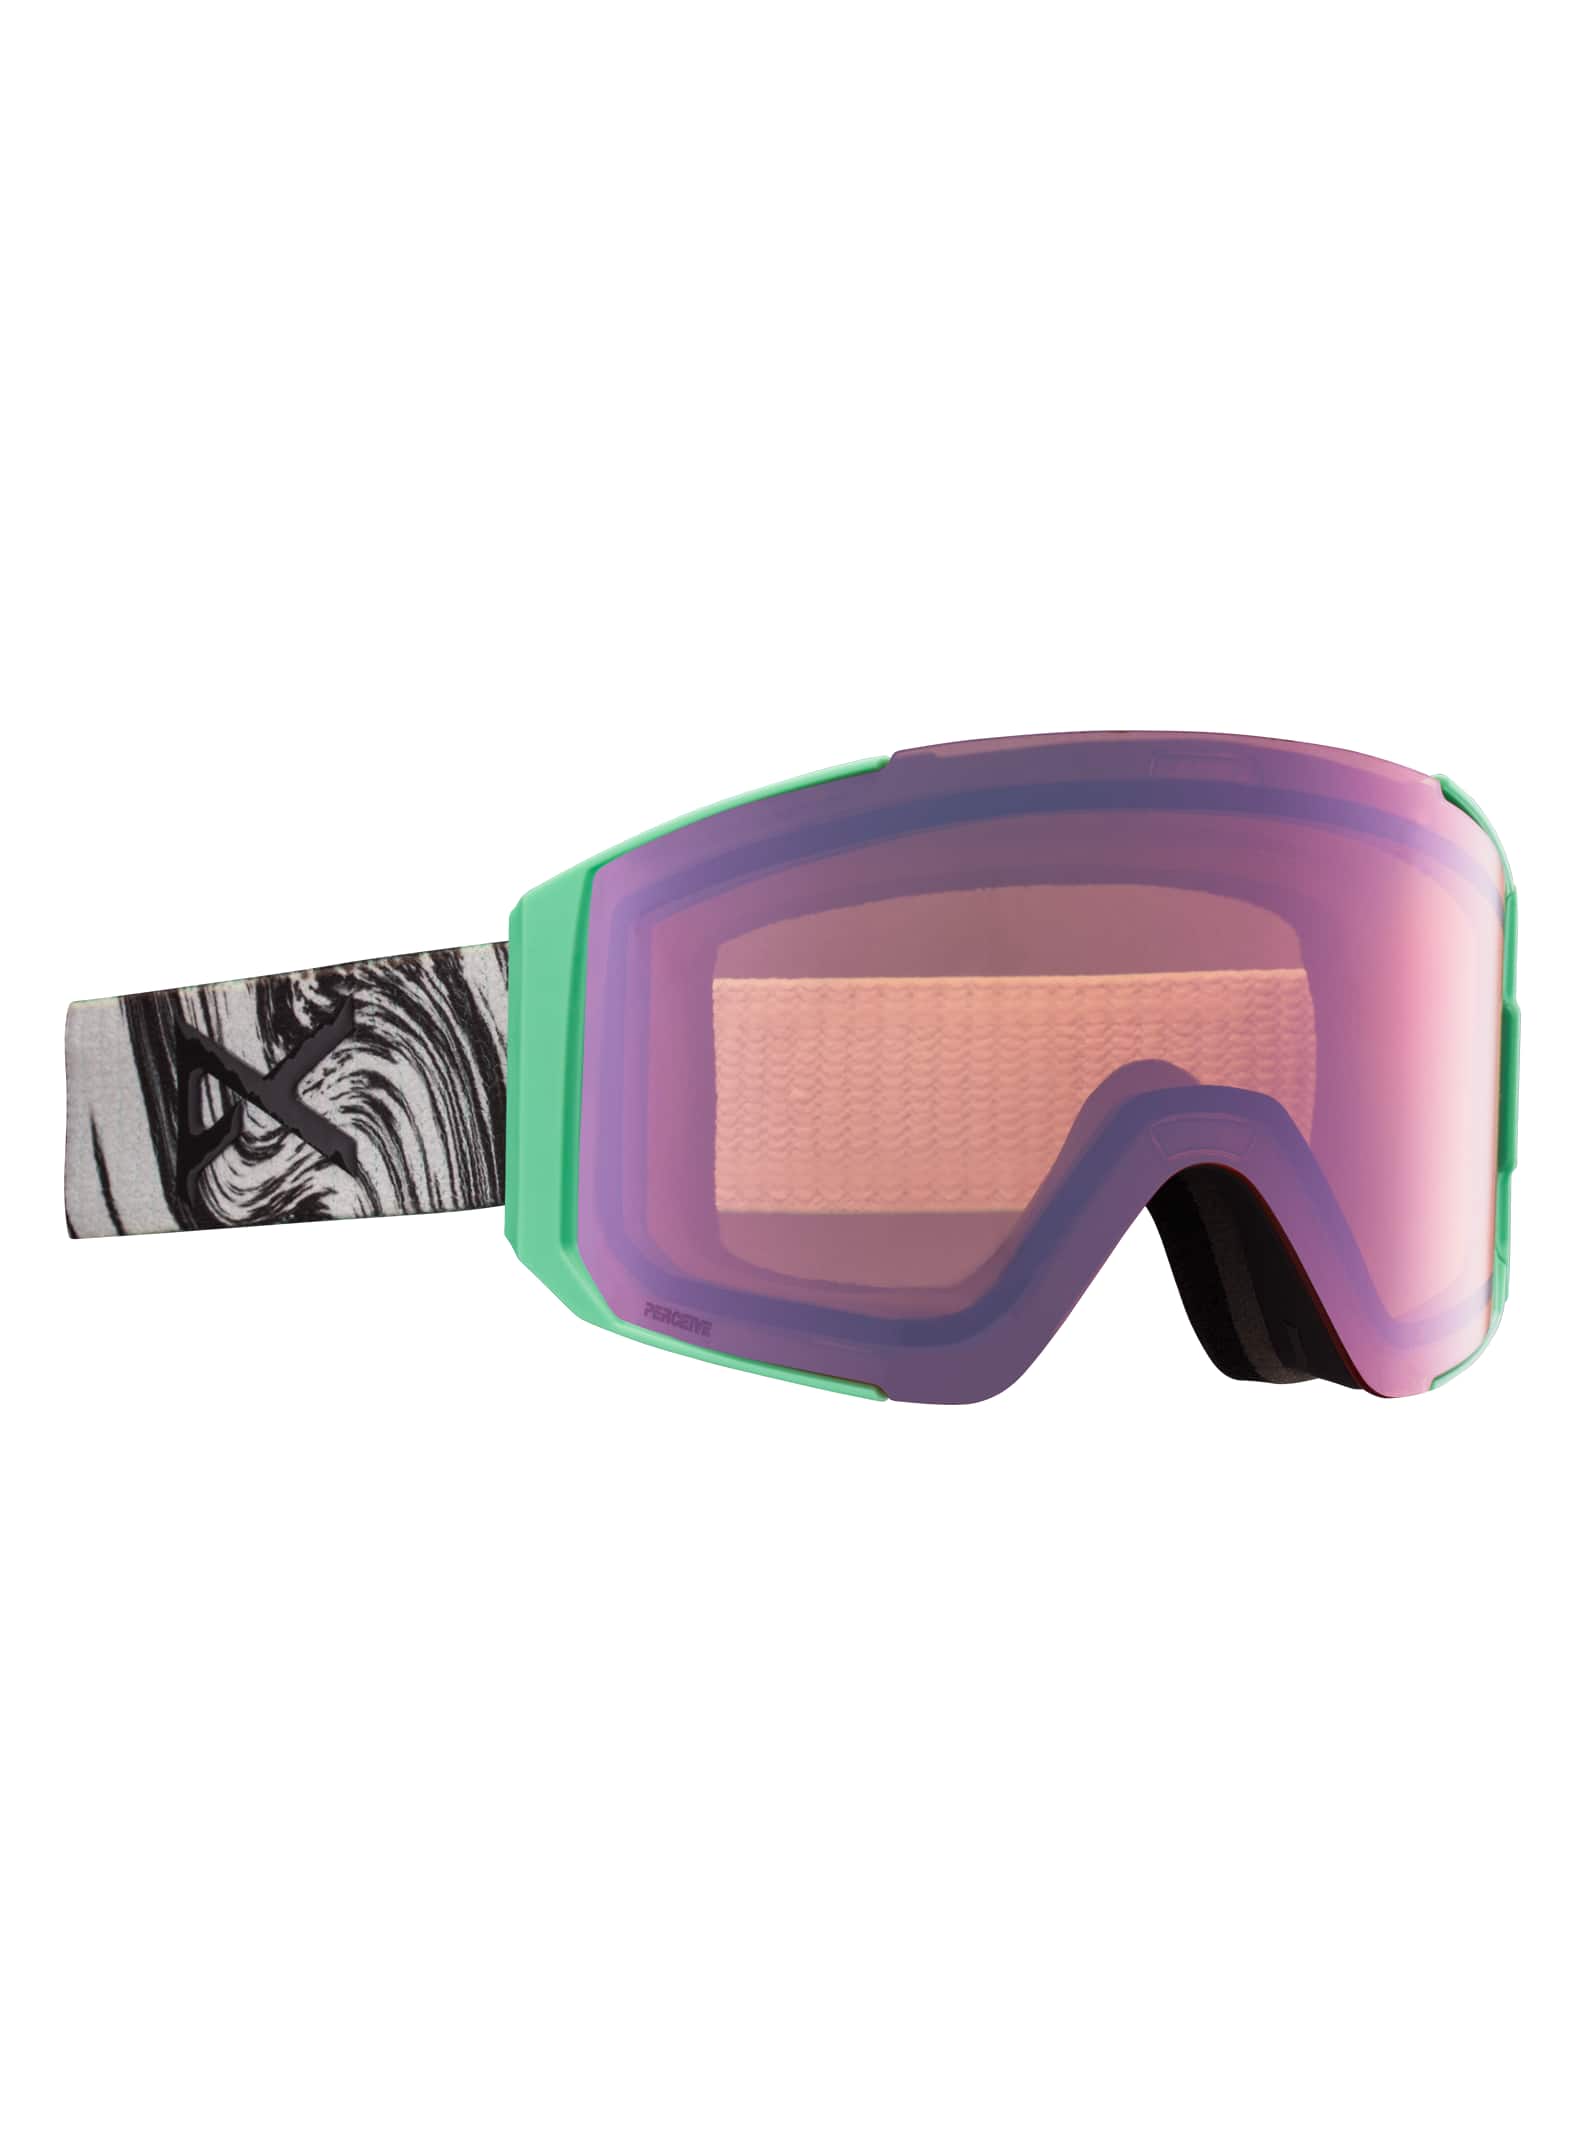 Gafas Snowboard Burton Web Oficial - Anon Insight Goggles + Bonus Lens  Hombre Naranjas Rojos